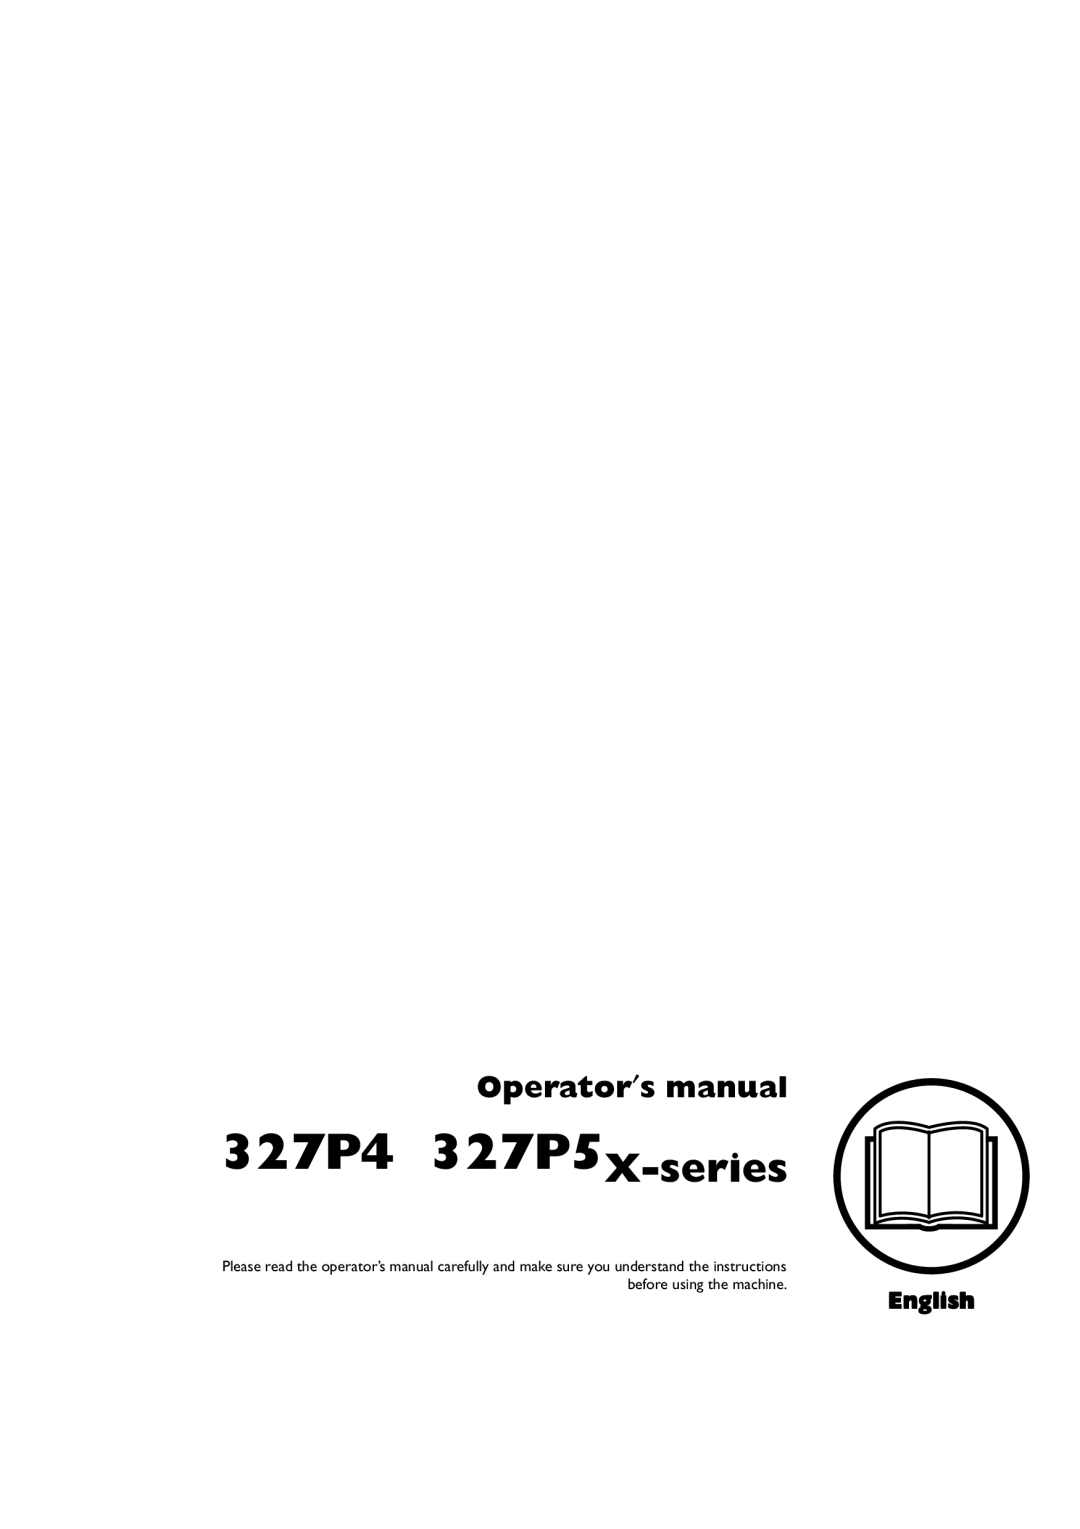 Husqvarna manual English, 327P4 327P5X-series, Operator′s manual 